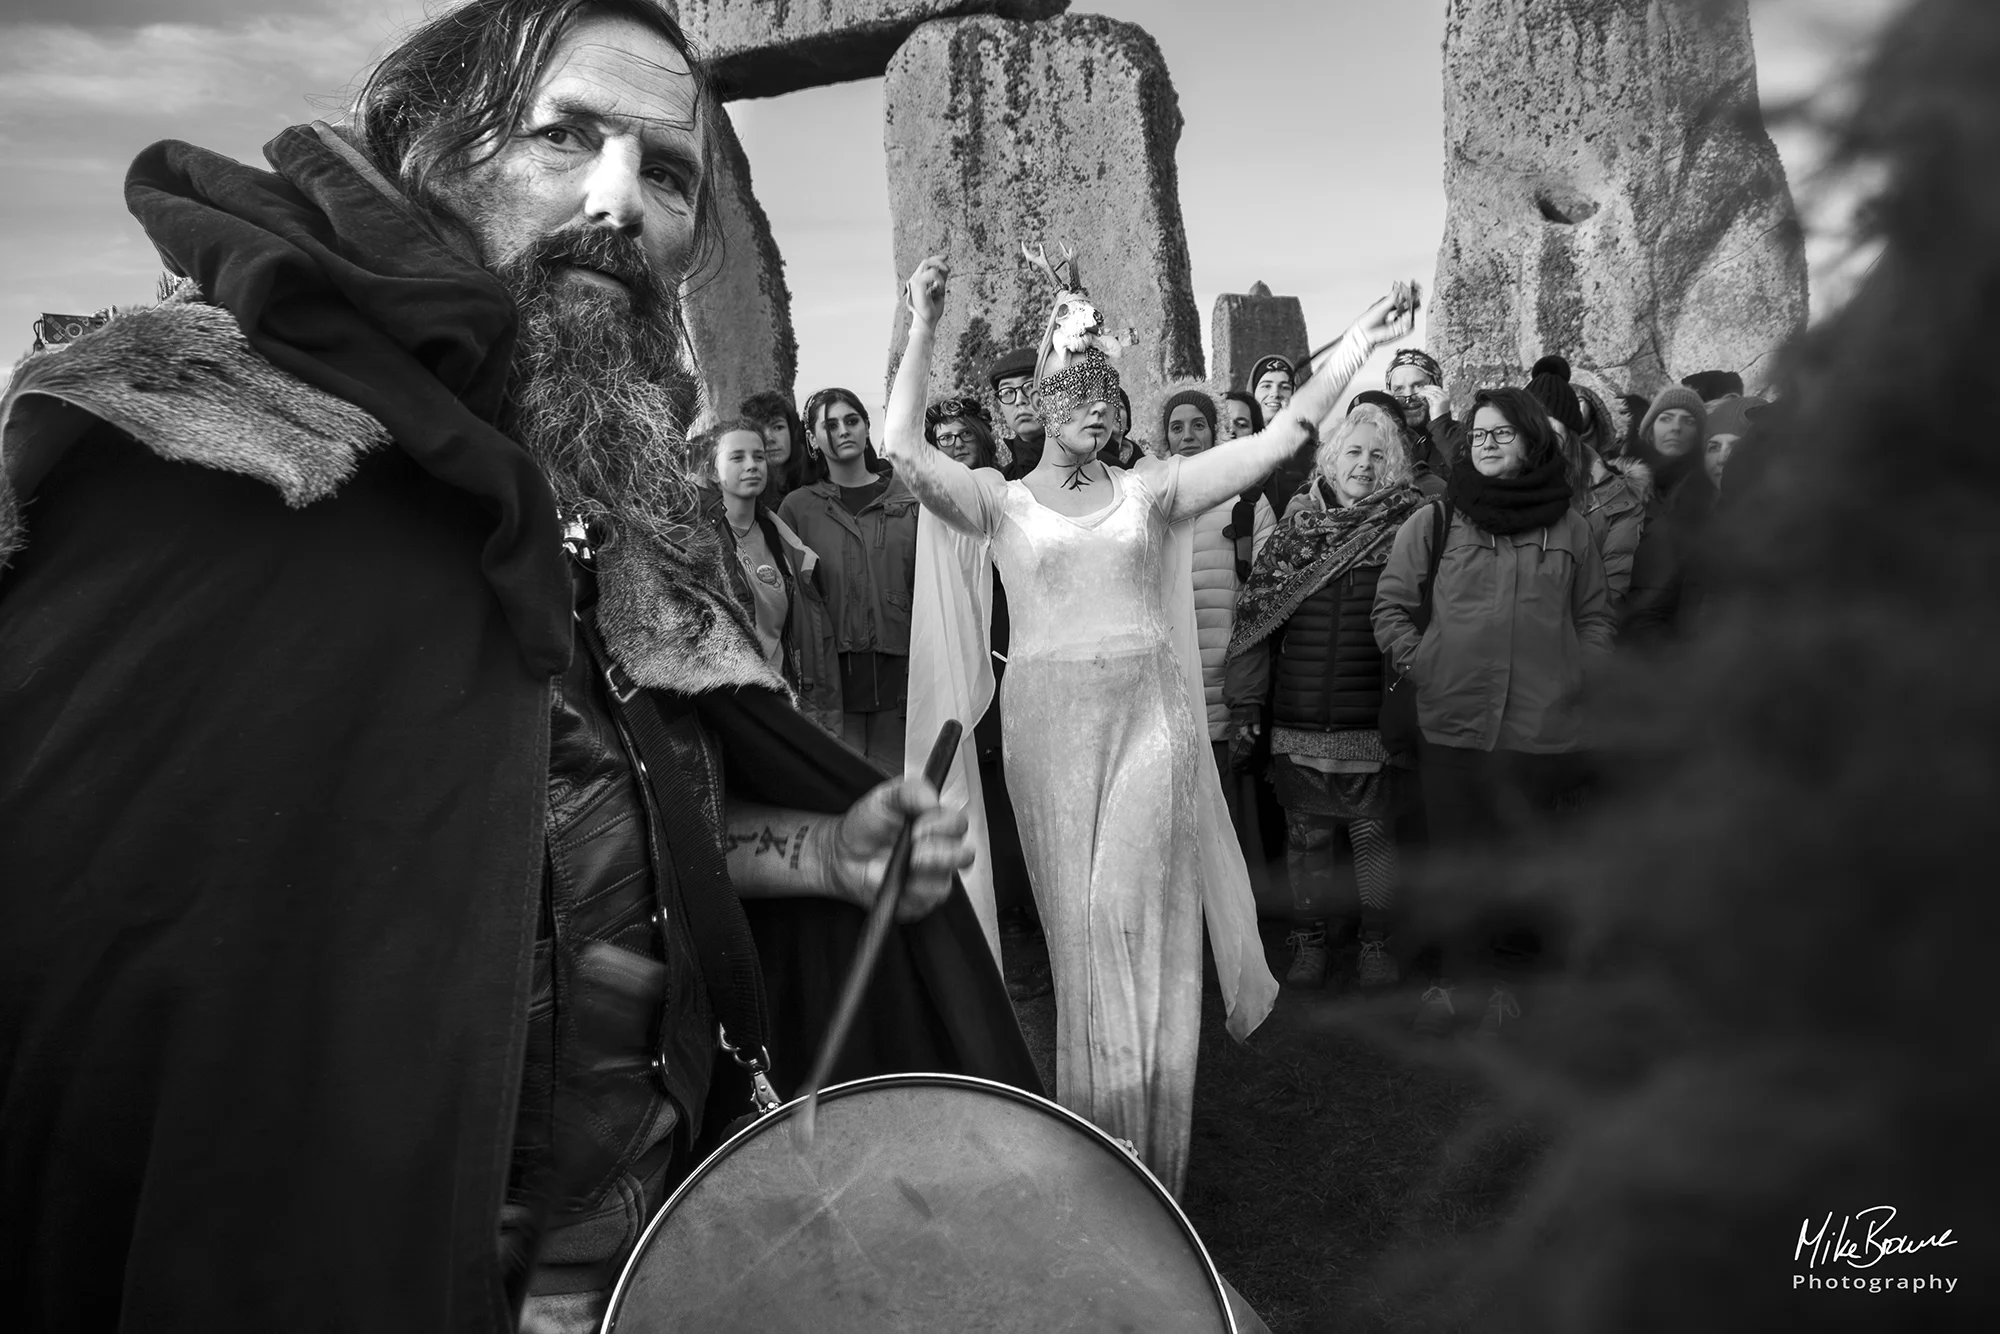 Man playing drum as girl in white dances at Stonehenge winter solstice